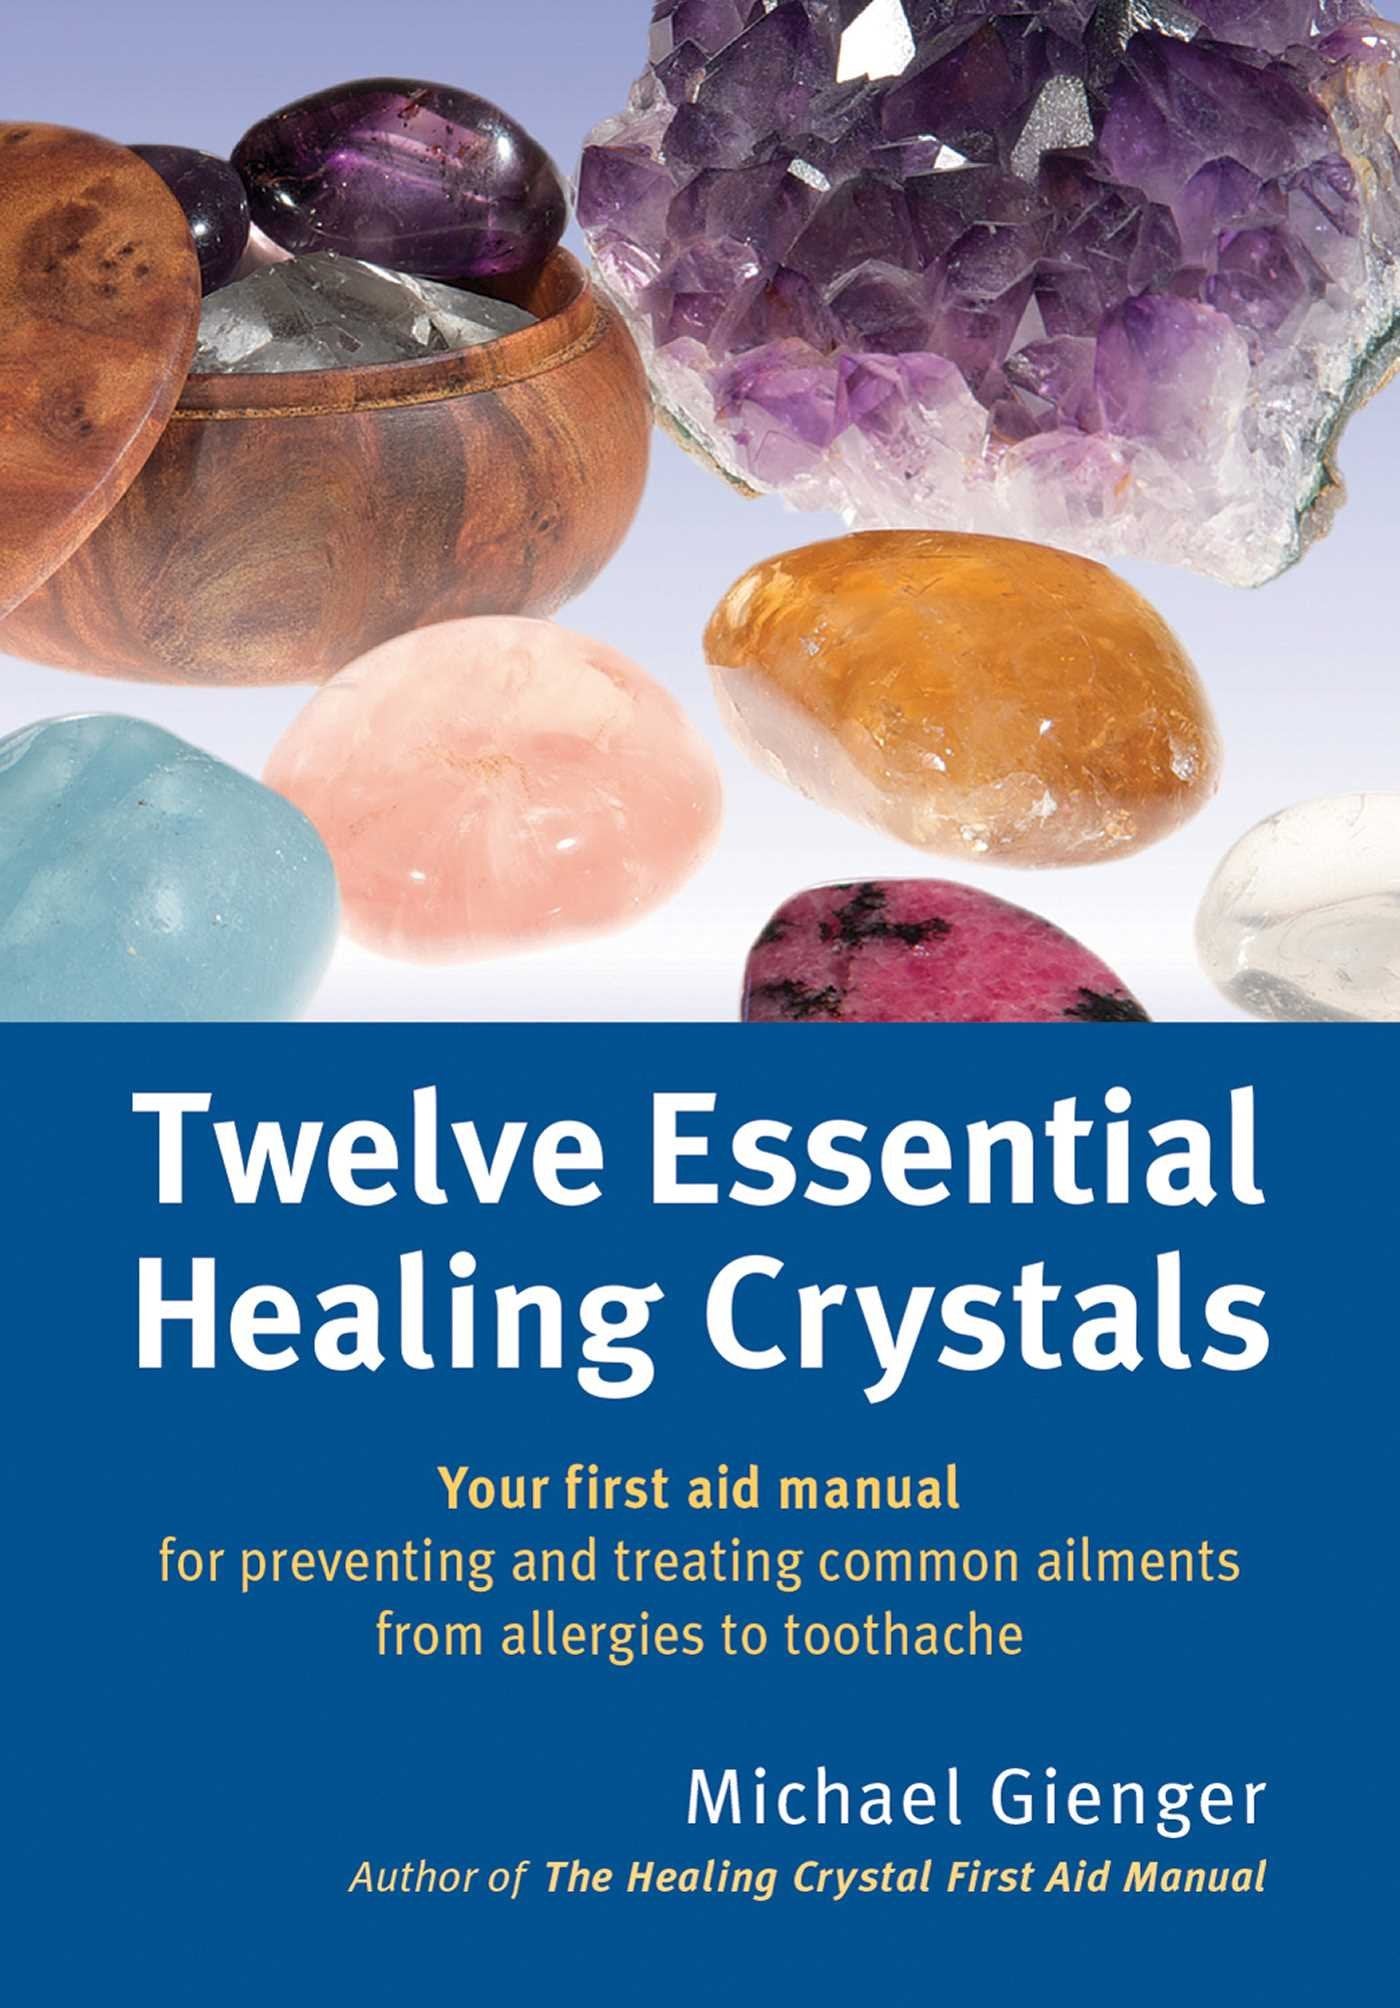 Twelve Essential Healing Crystals by Michael Gienger